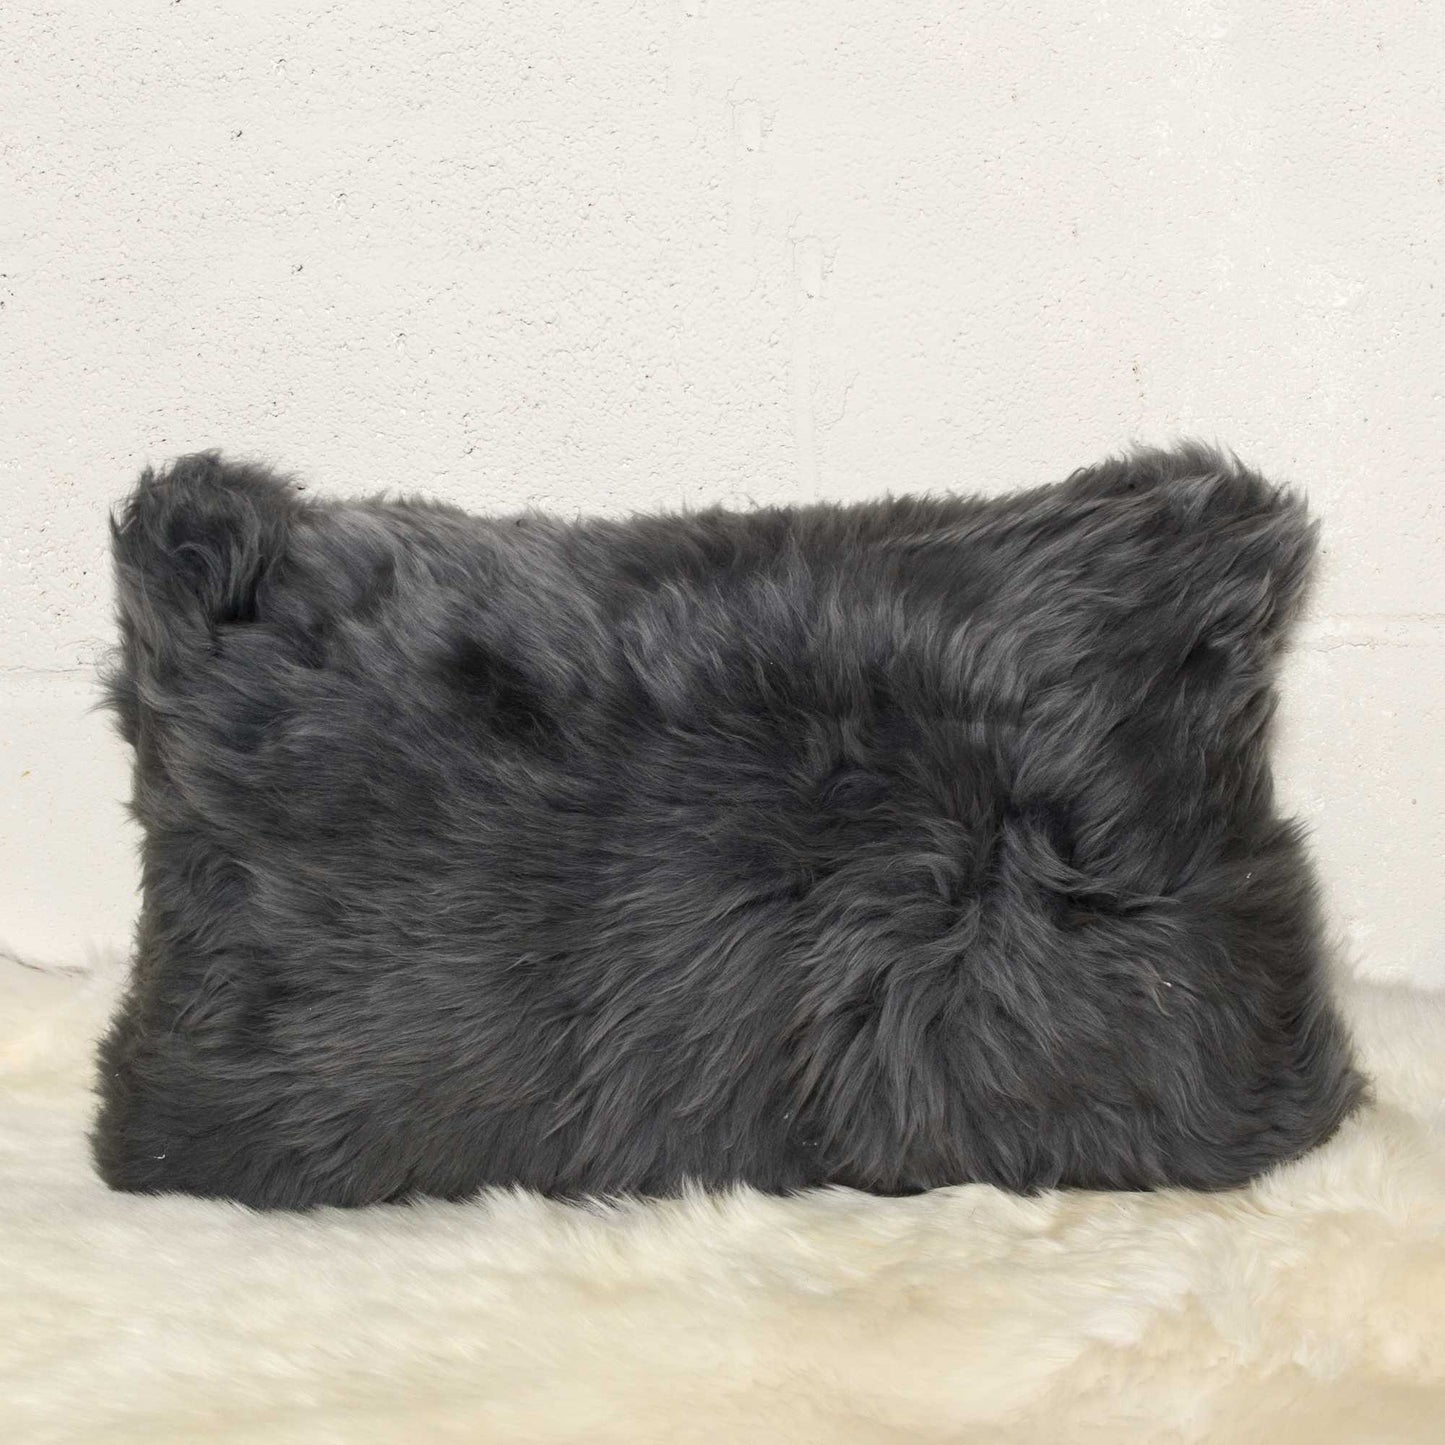 12" X 20" X 5" Gray Sheepskin  Pillow